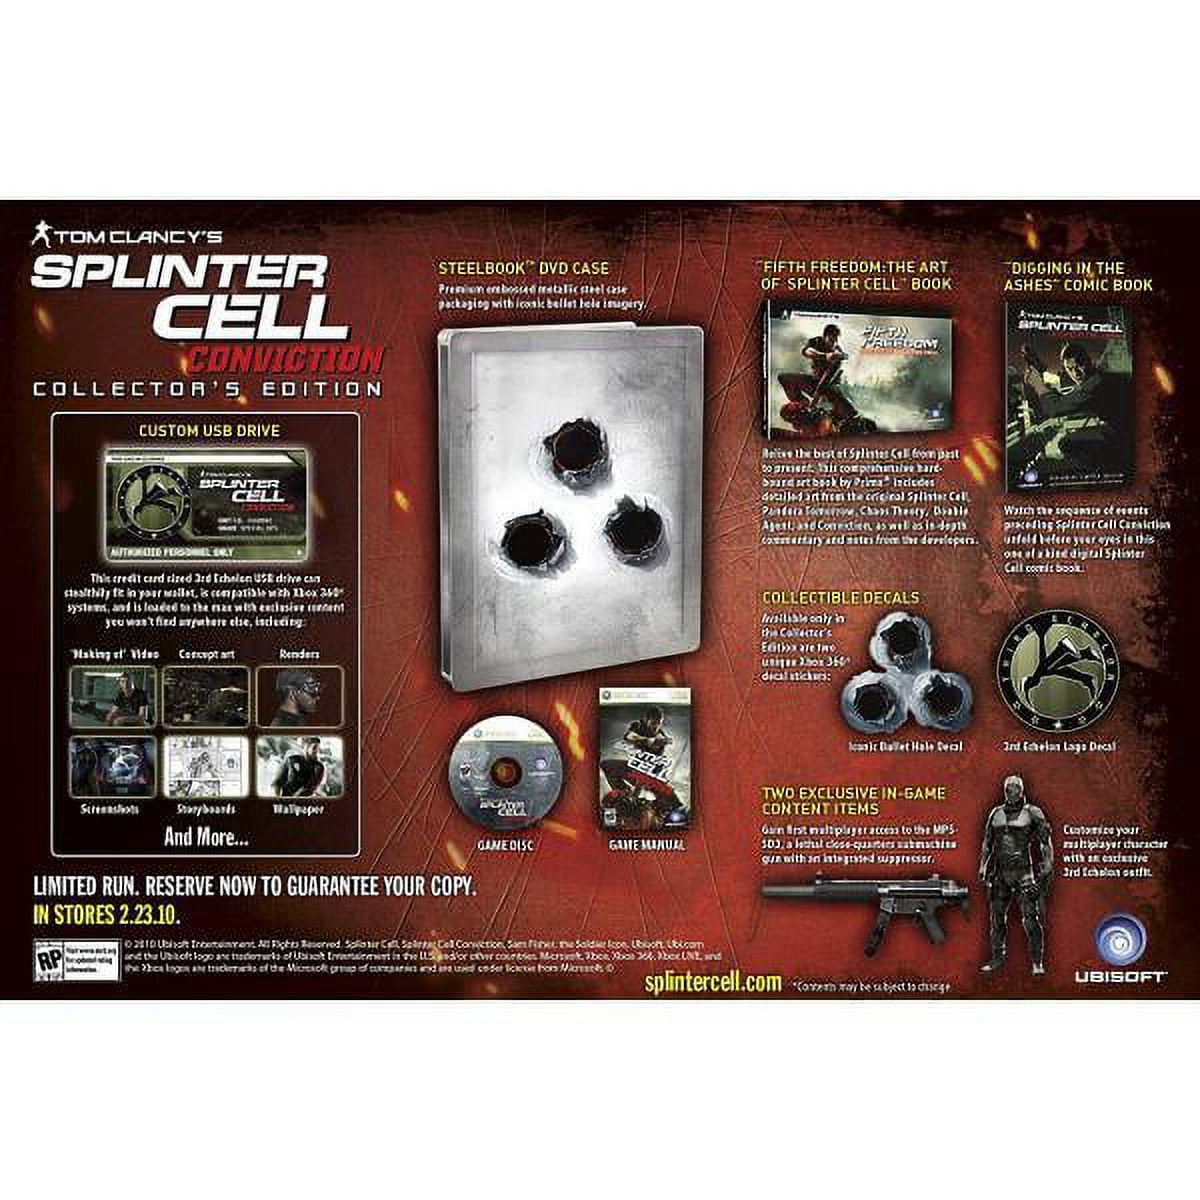 Xbox 360 - Tom Clancy's Splinter Cell Conviction Microsoft Xbox 360  Complete #111